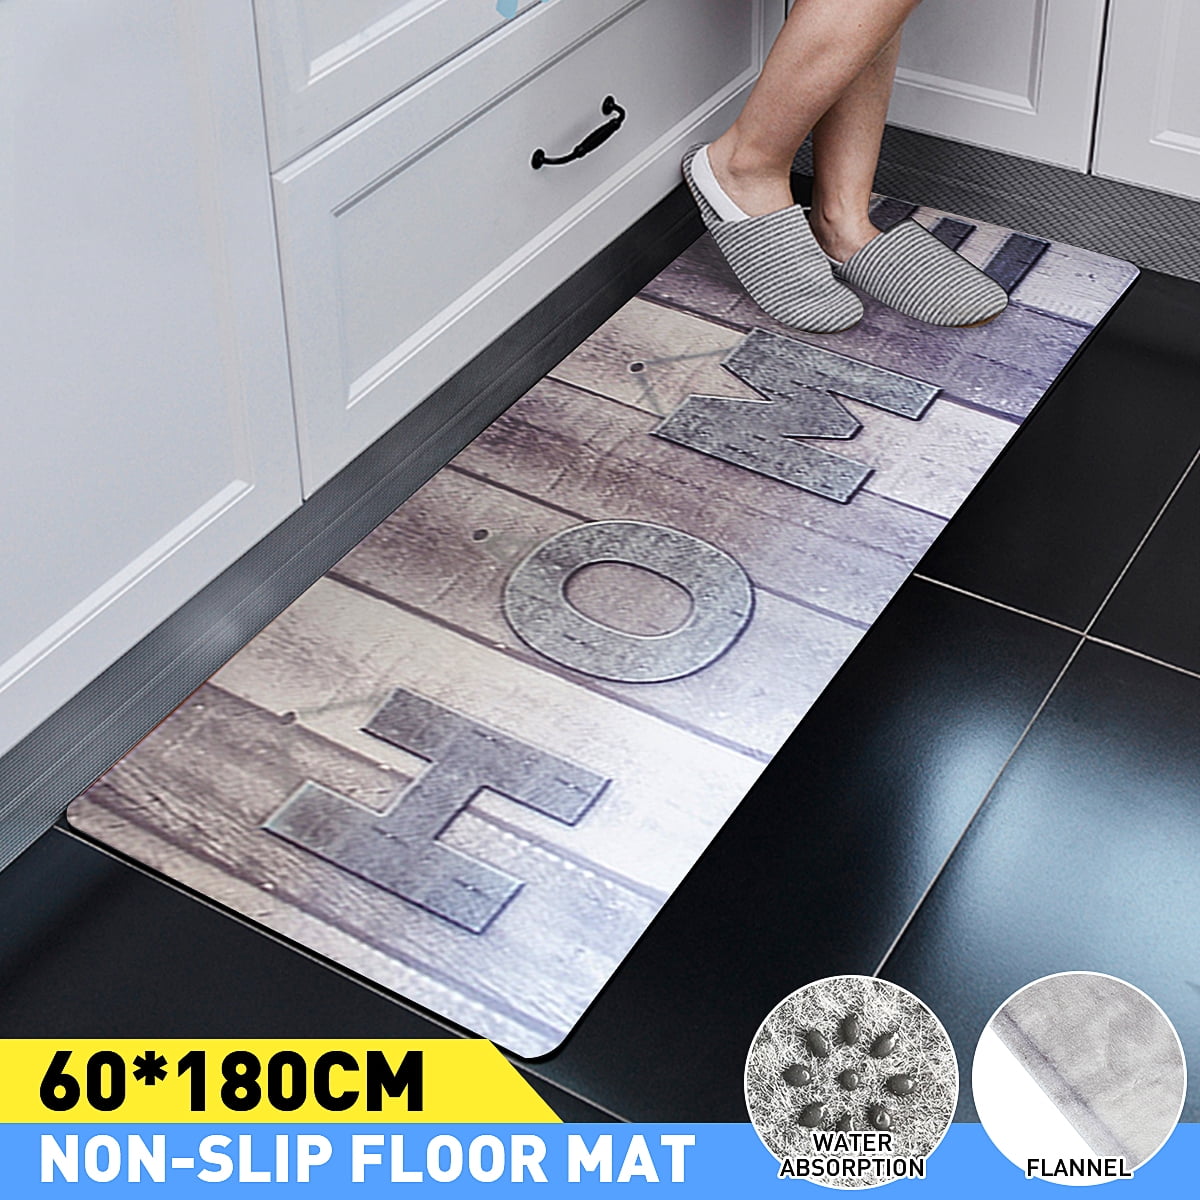 4 Size Bath Mats Bathroom Carpets Absorbent Soft Memory Foam Non-slip Rug Mats 